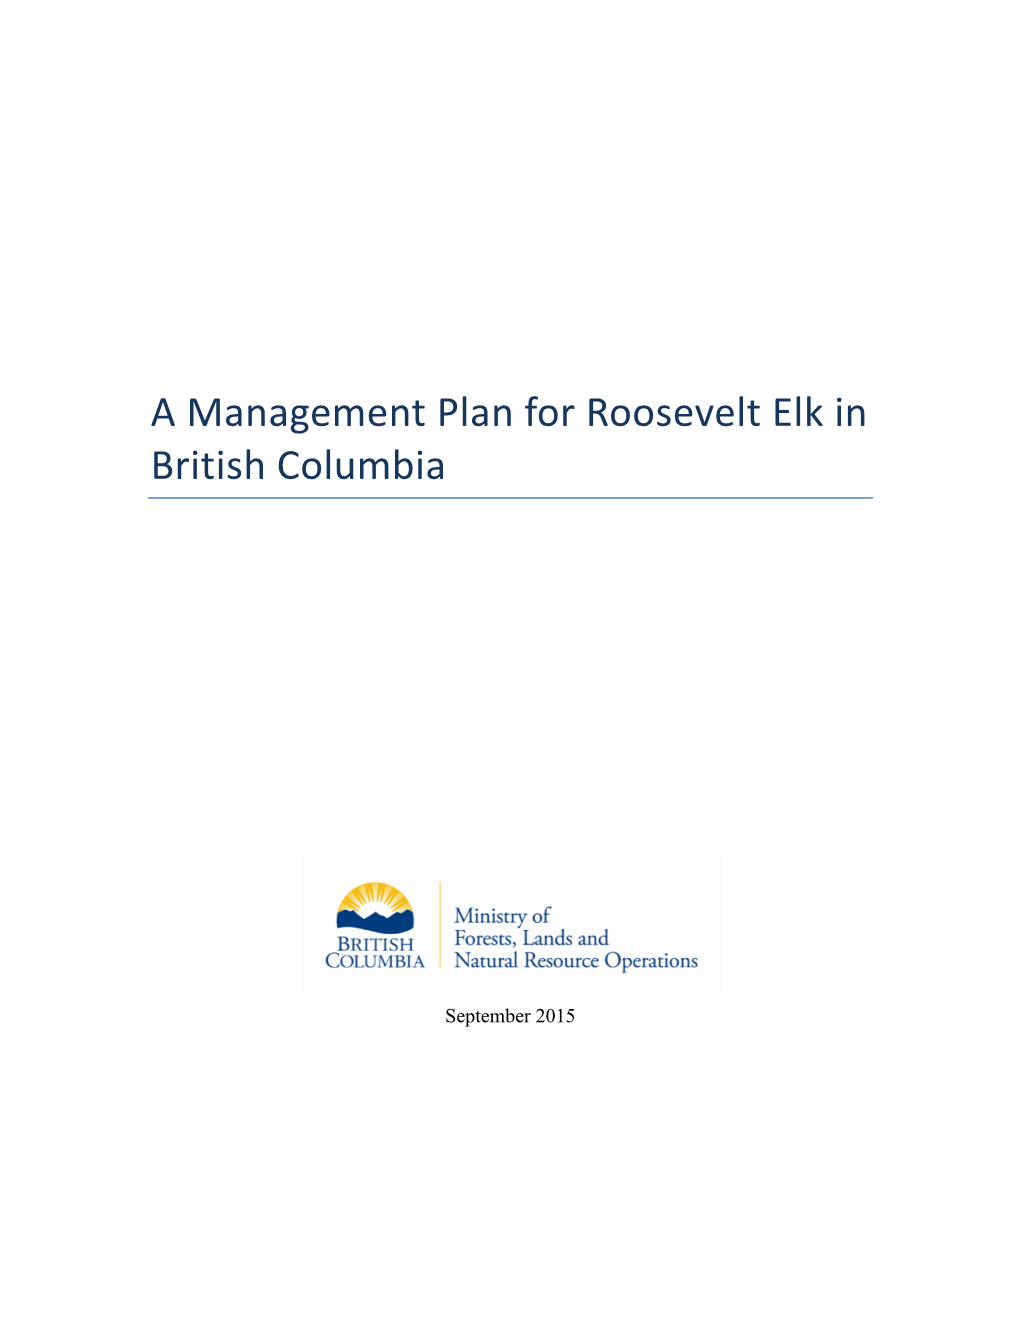 Management Plan for Roosevelt Elk in British Columbia